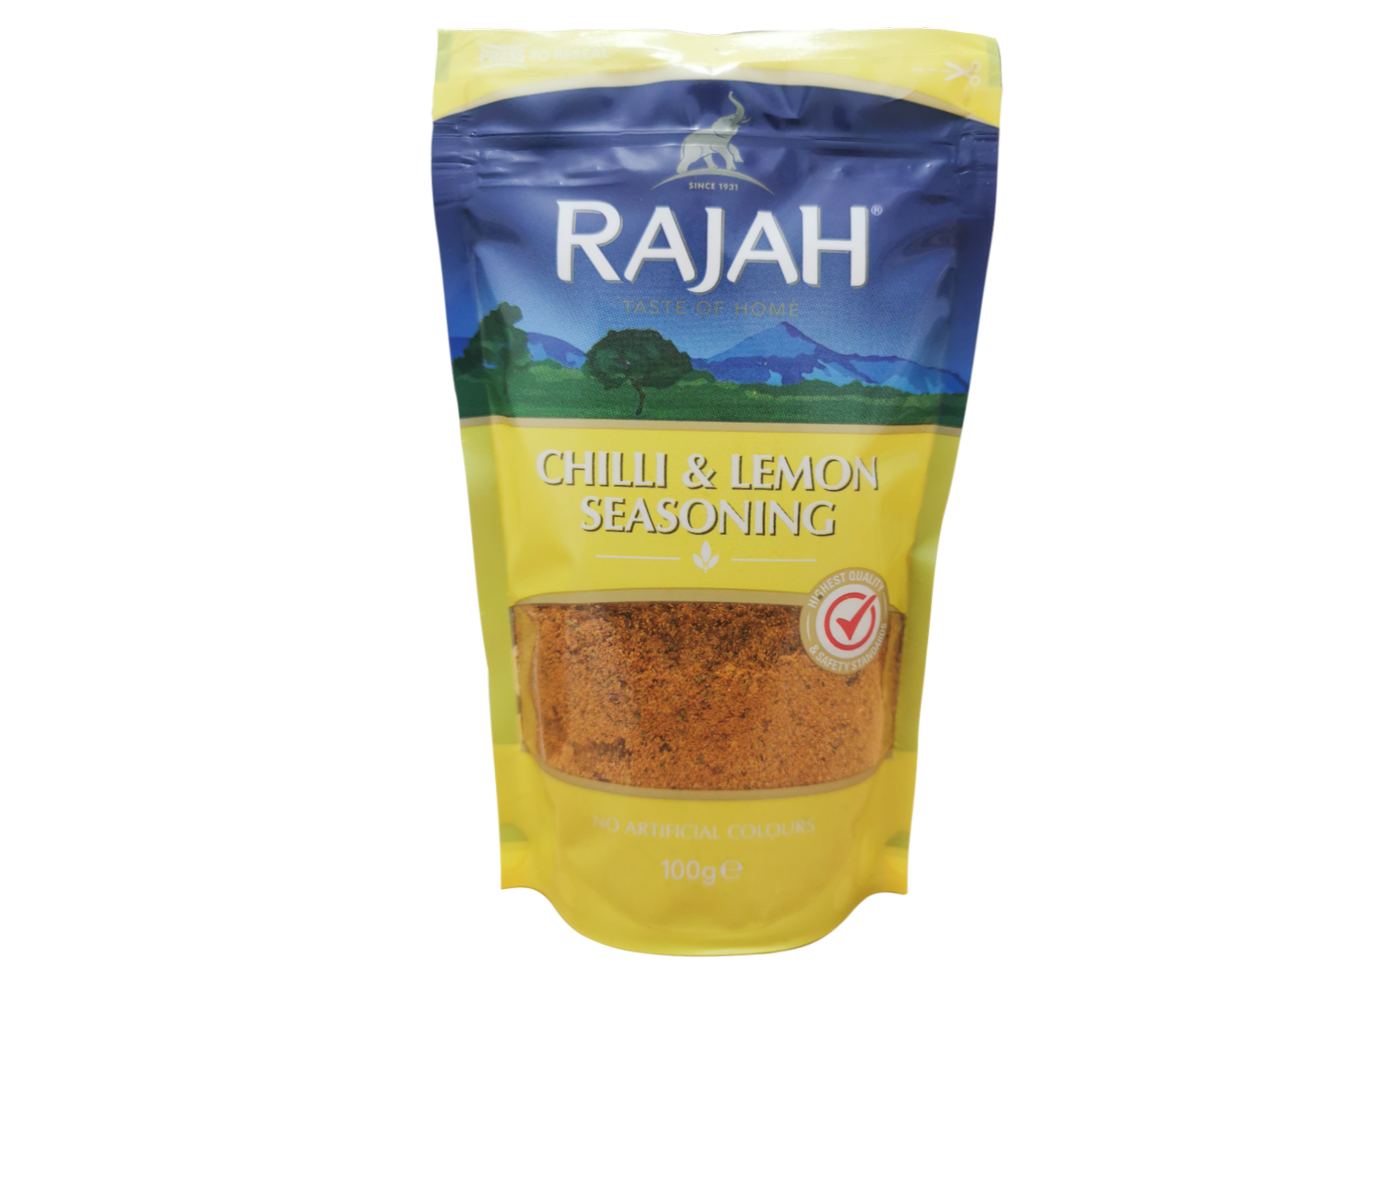 Rajah Chilli & Lemon Seasoning